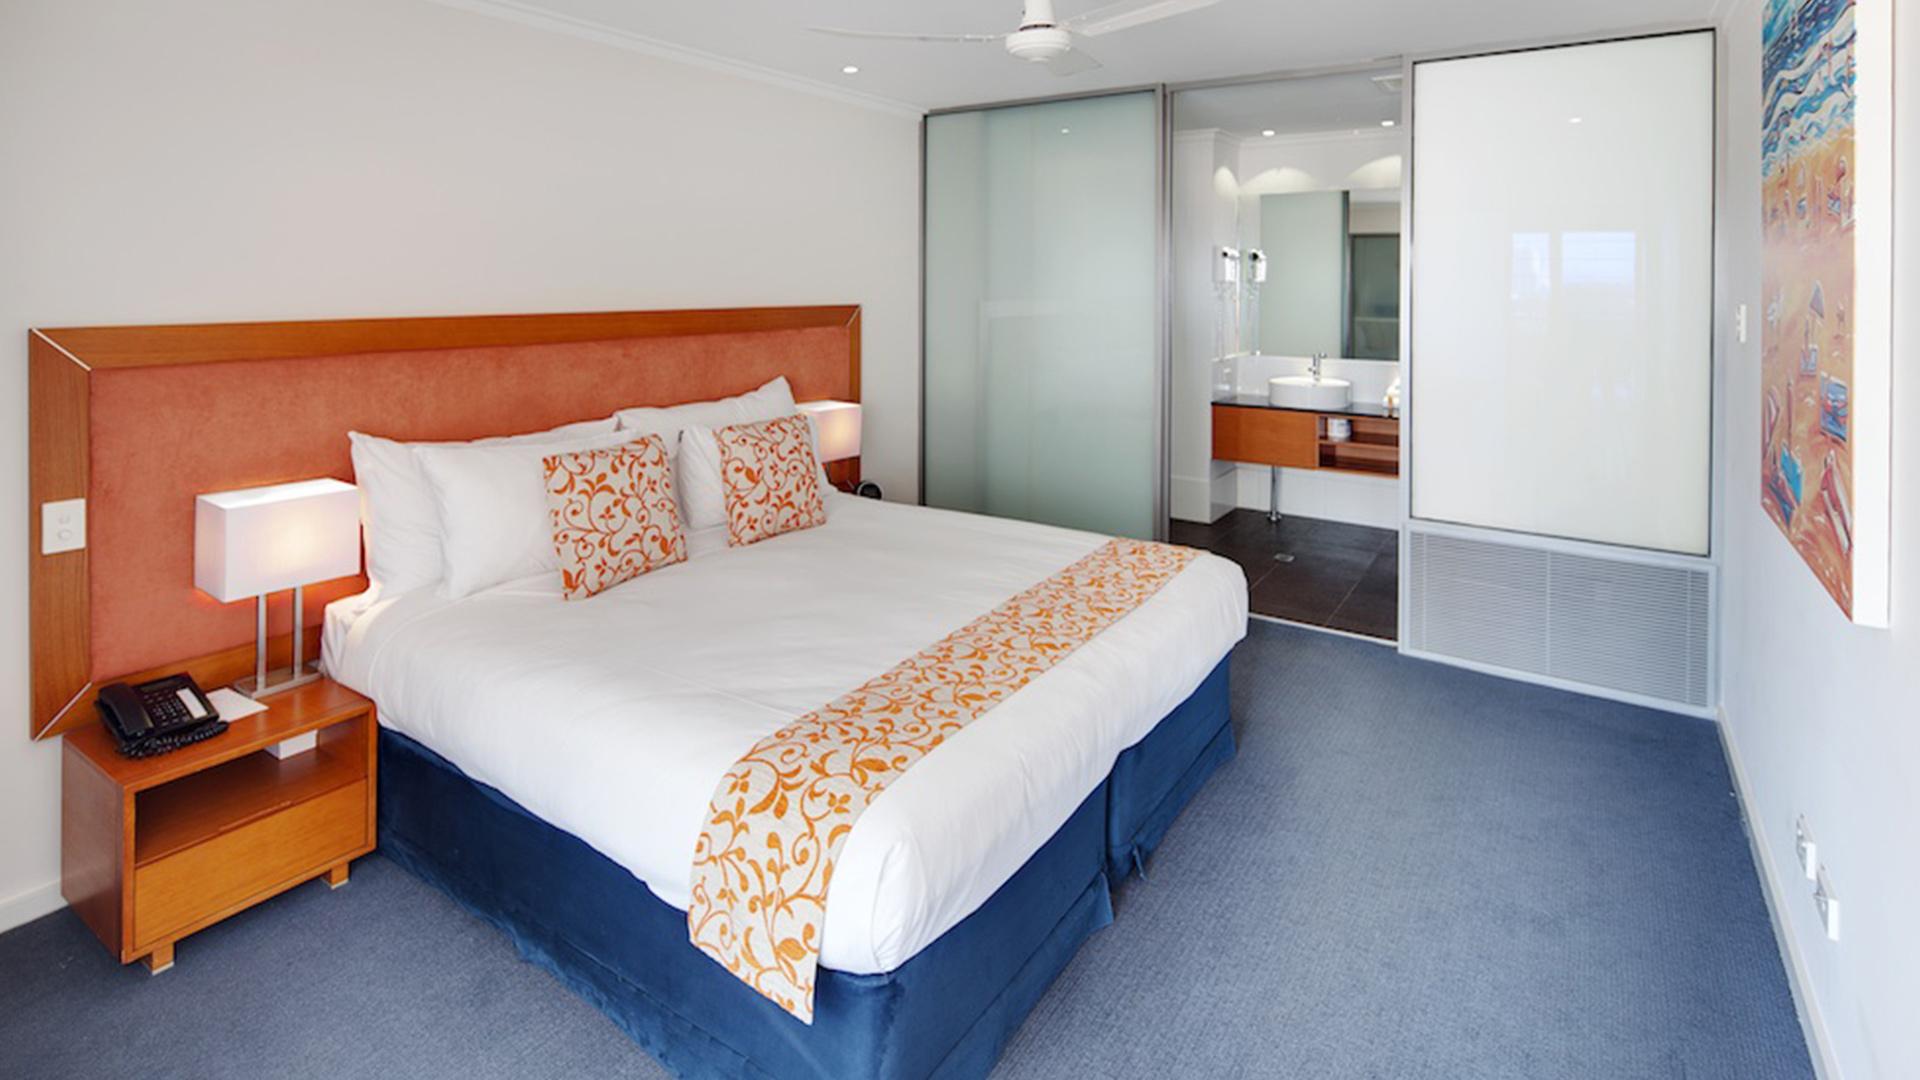 One-Bedroom Apartment image 1 at Seashells Mandurah by City of Mandurah, Western Australia, Australia